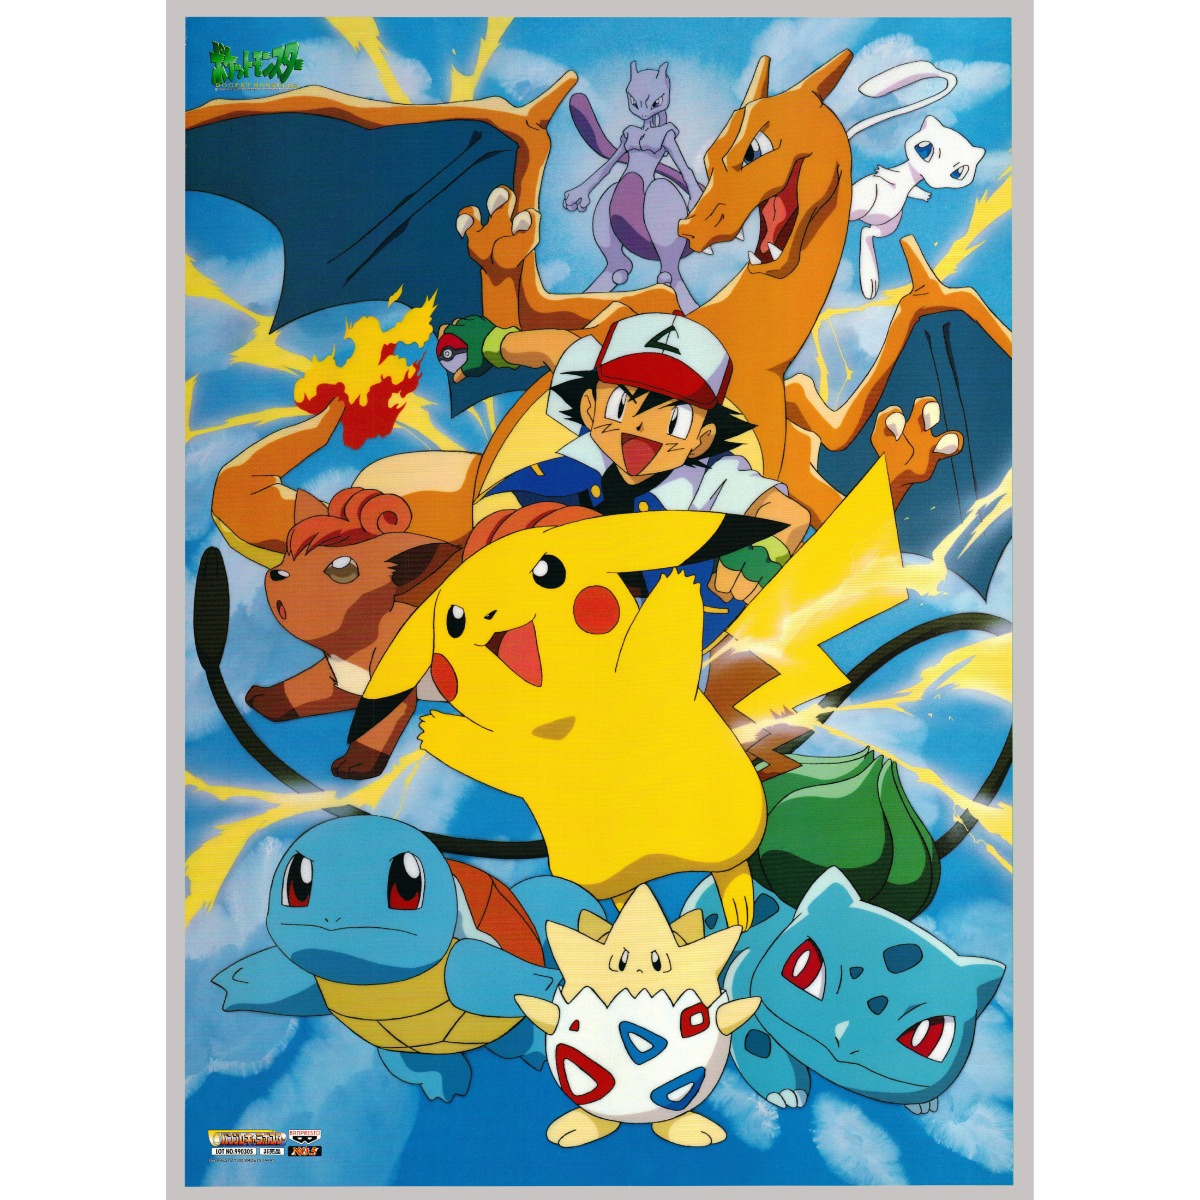 Pokémon Journeys: The Series, Dubbing Wikia